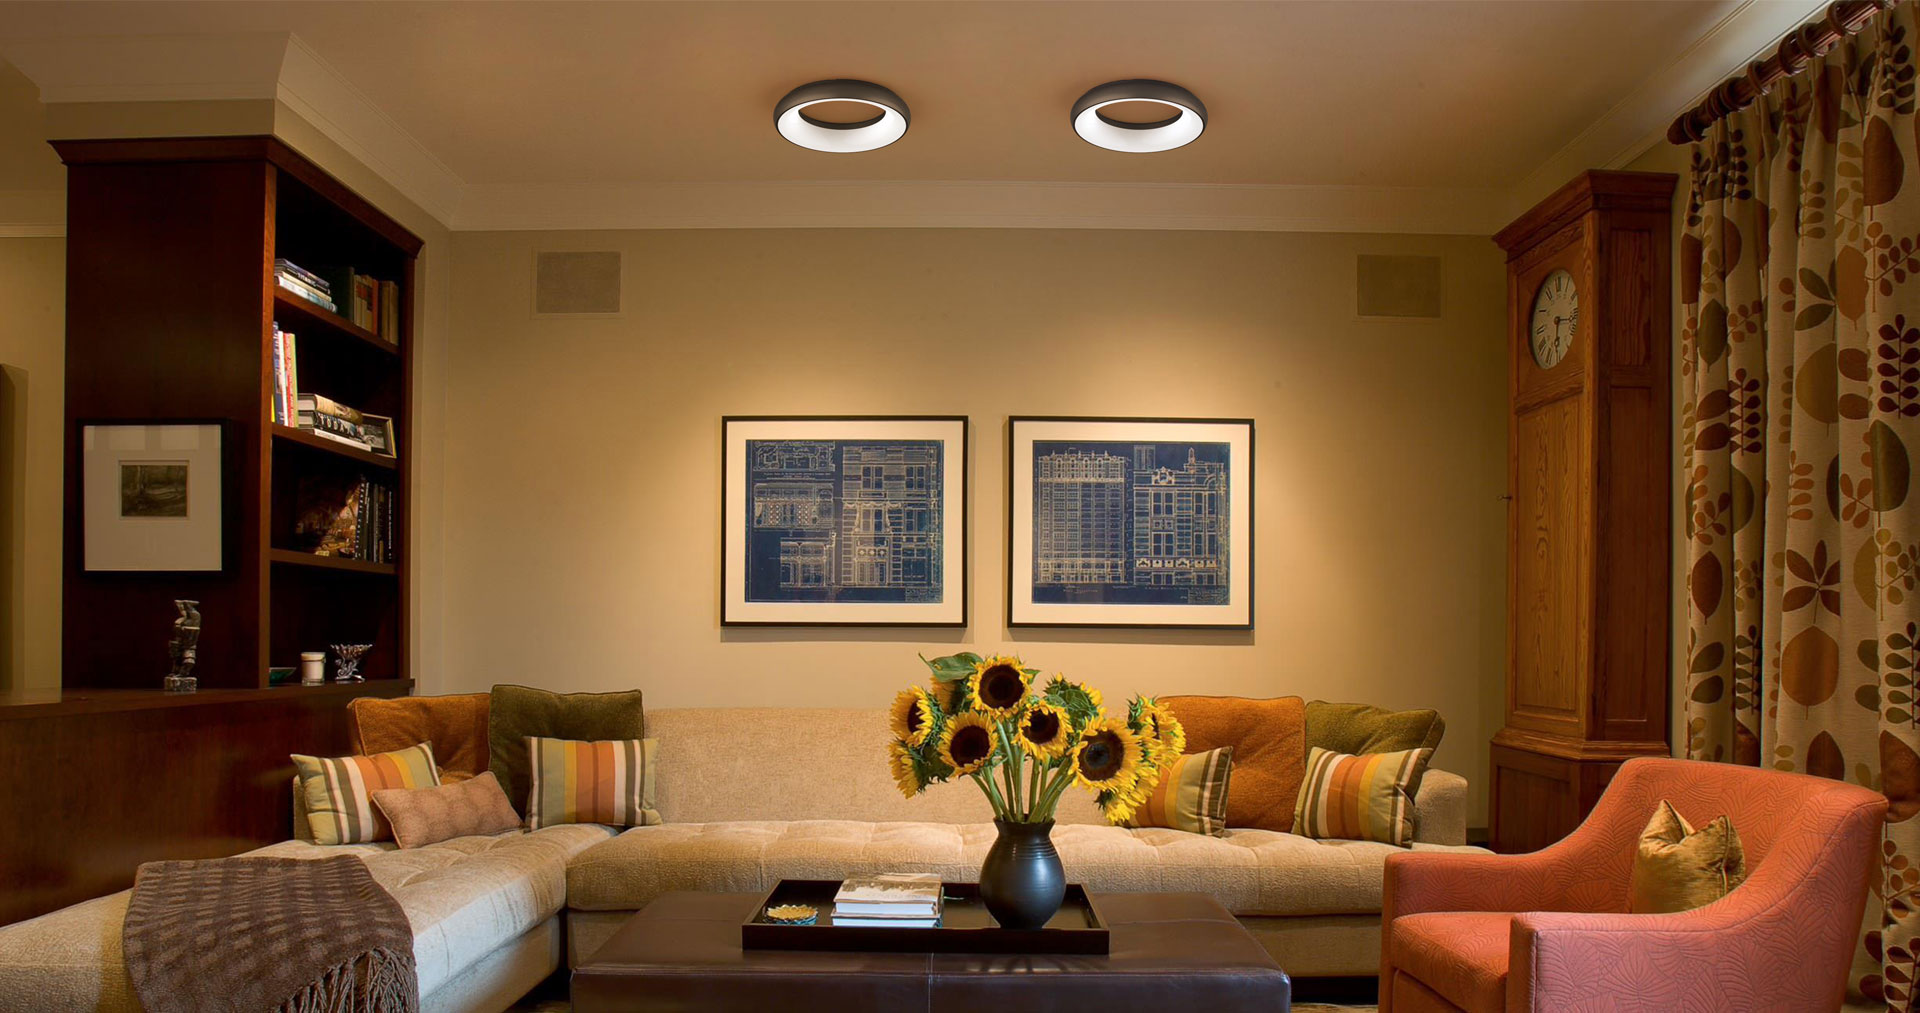 spotlights in living room ceiling